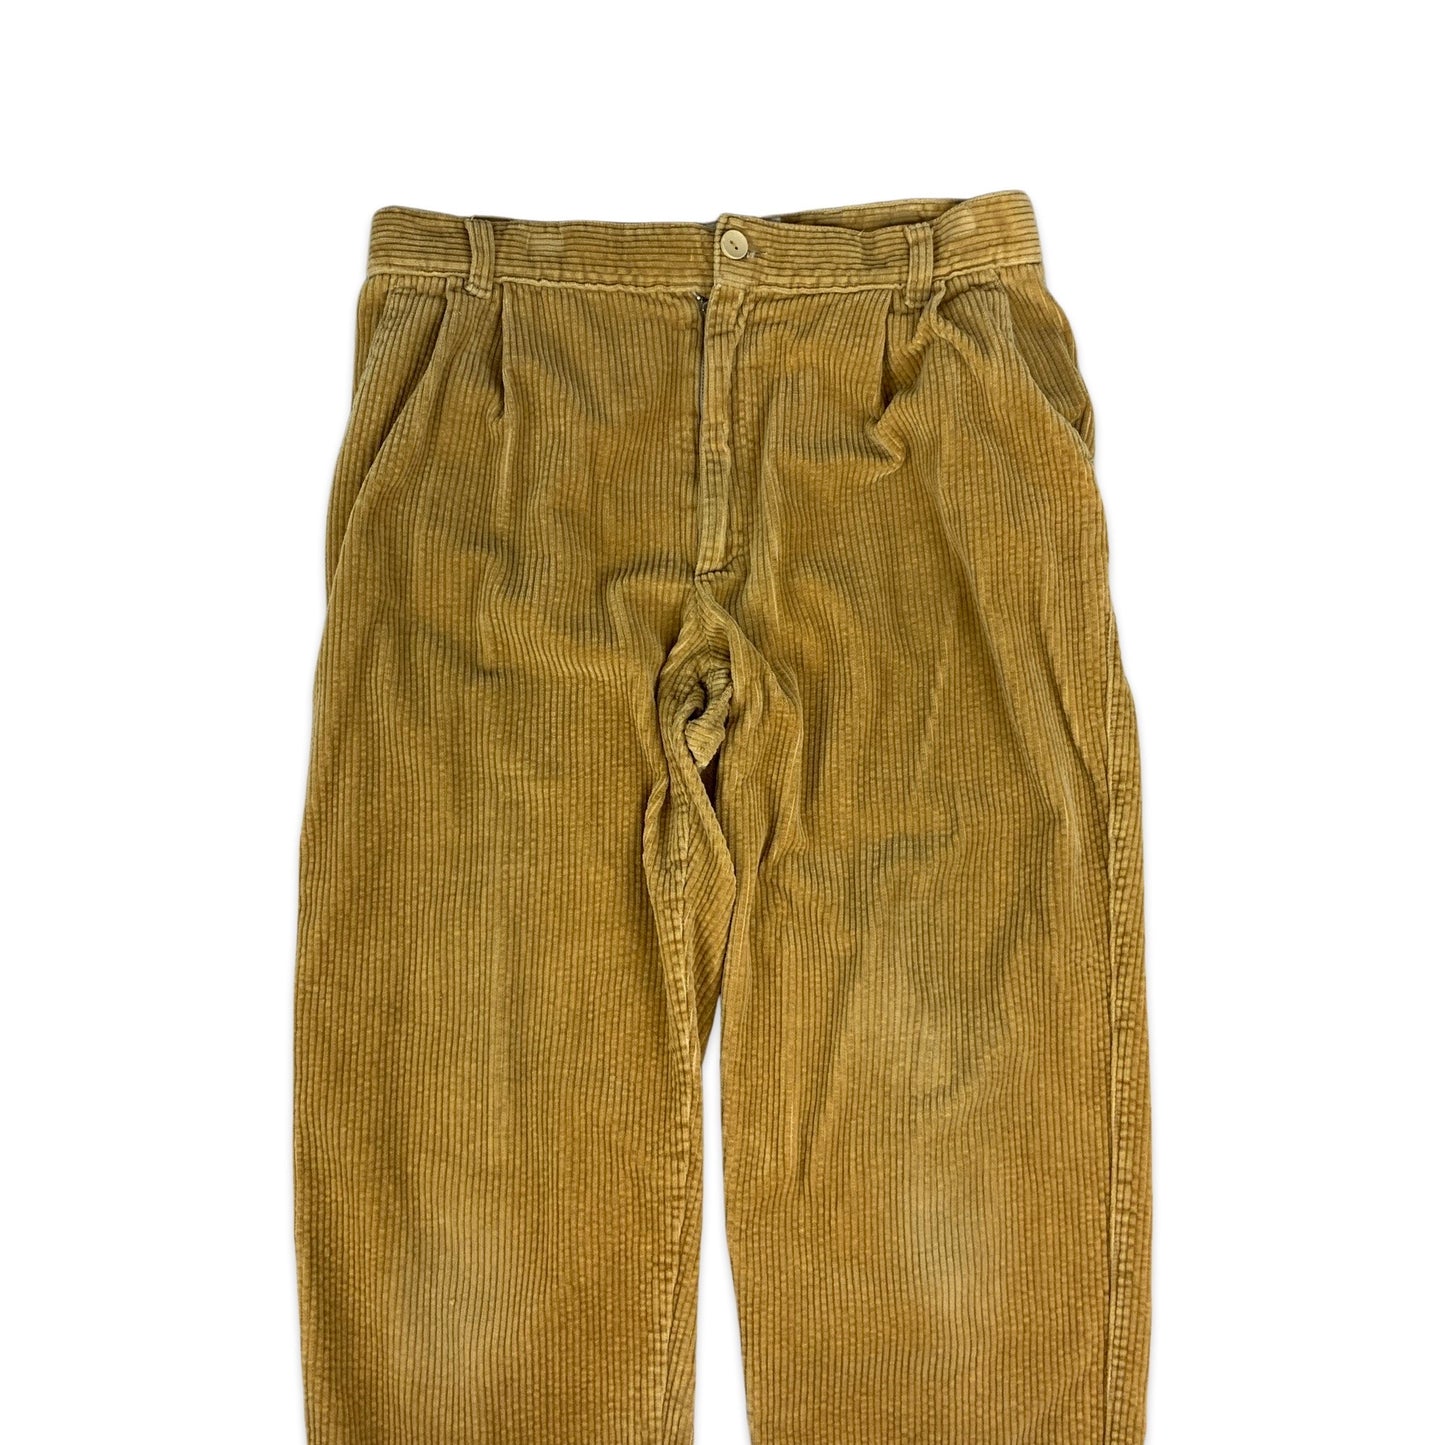 Vintage Beige Pleated Corduroy Trousers 34W 29L